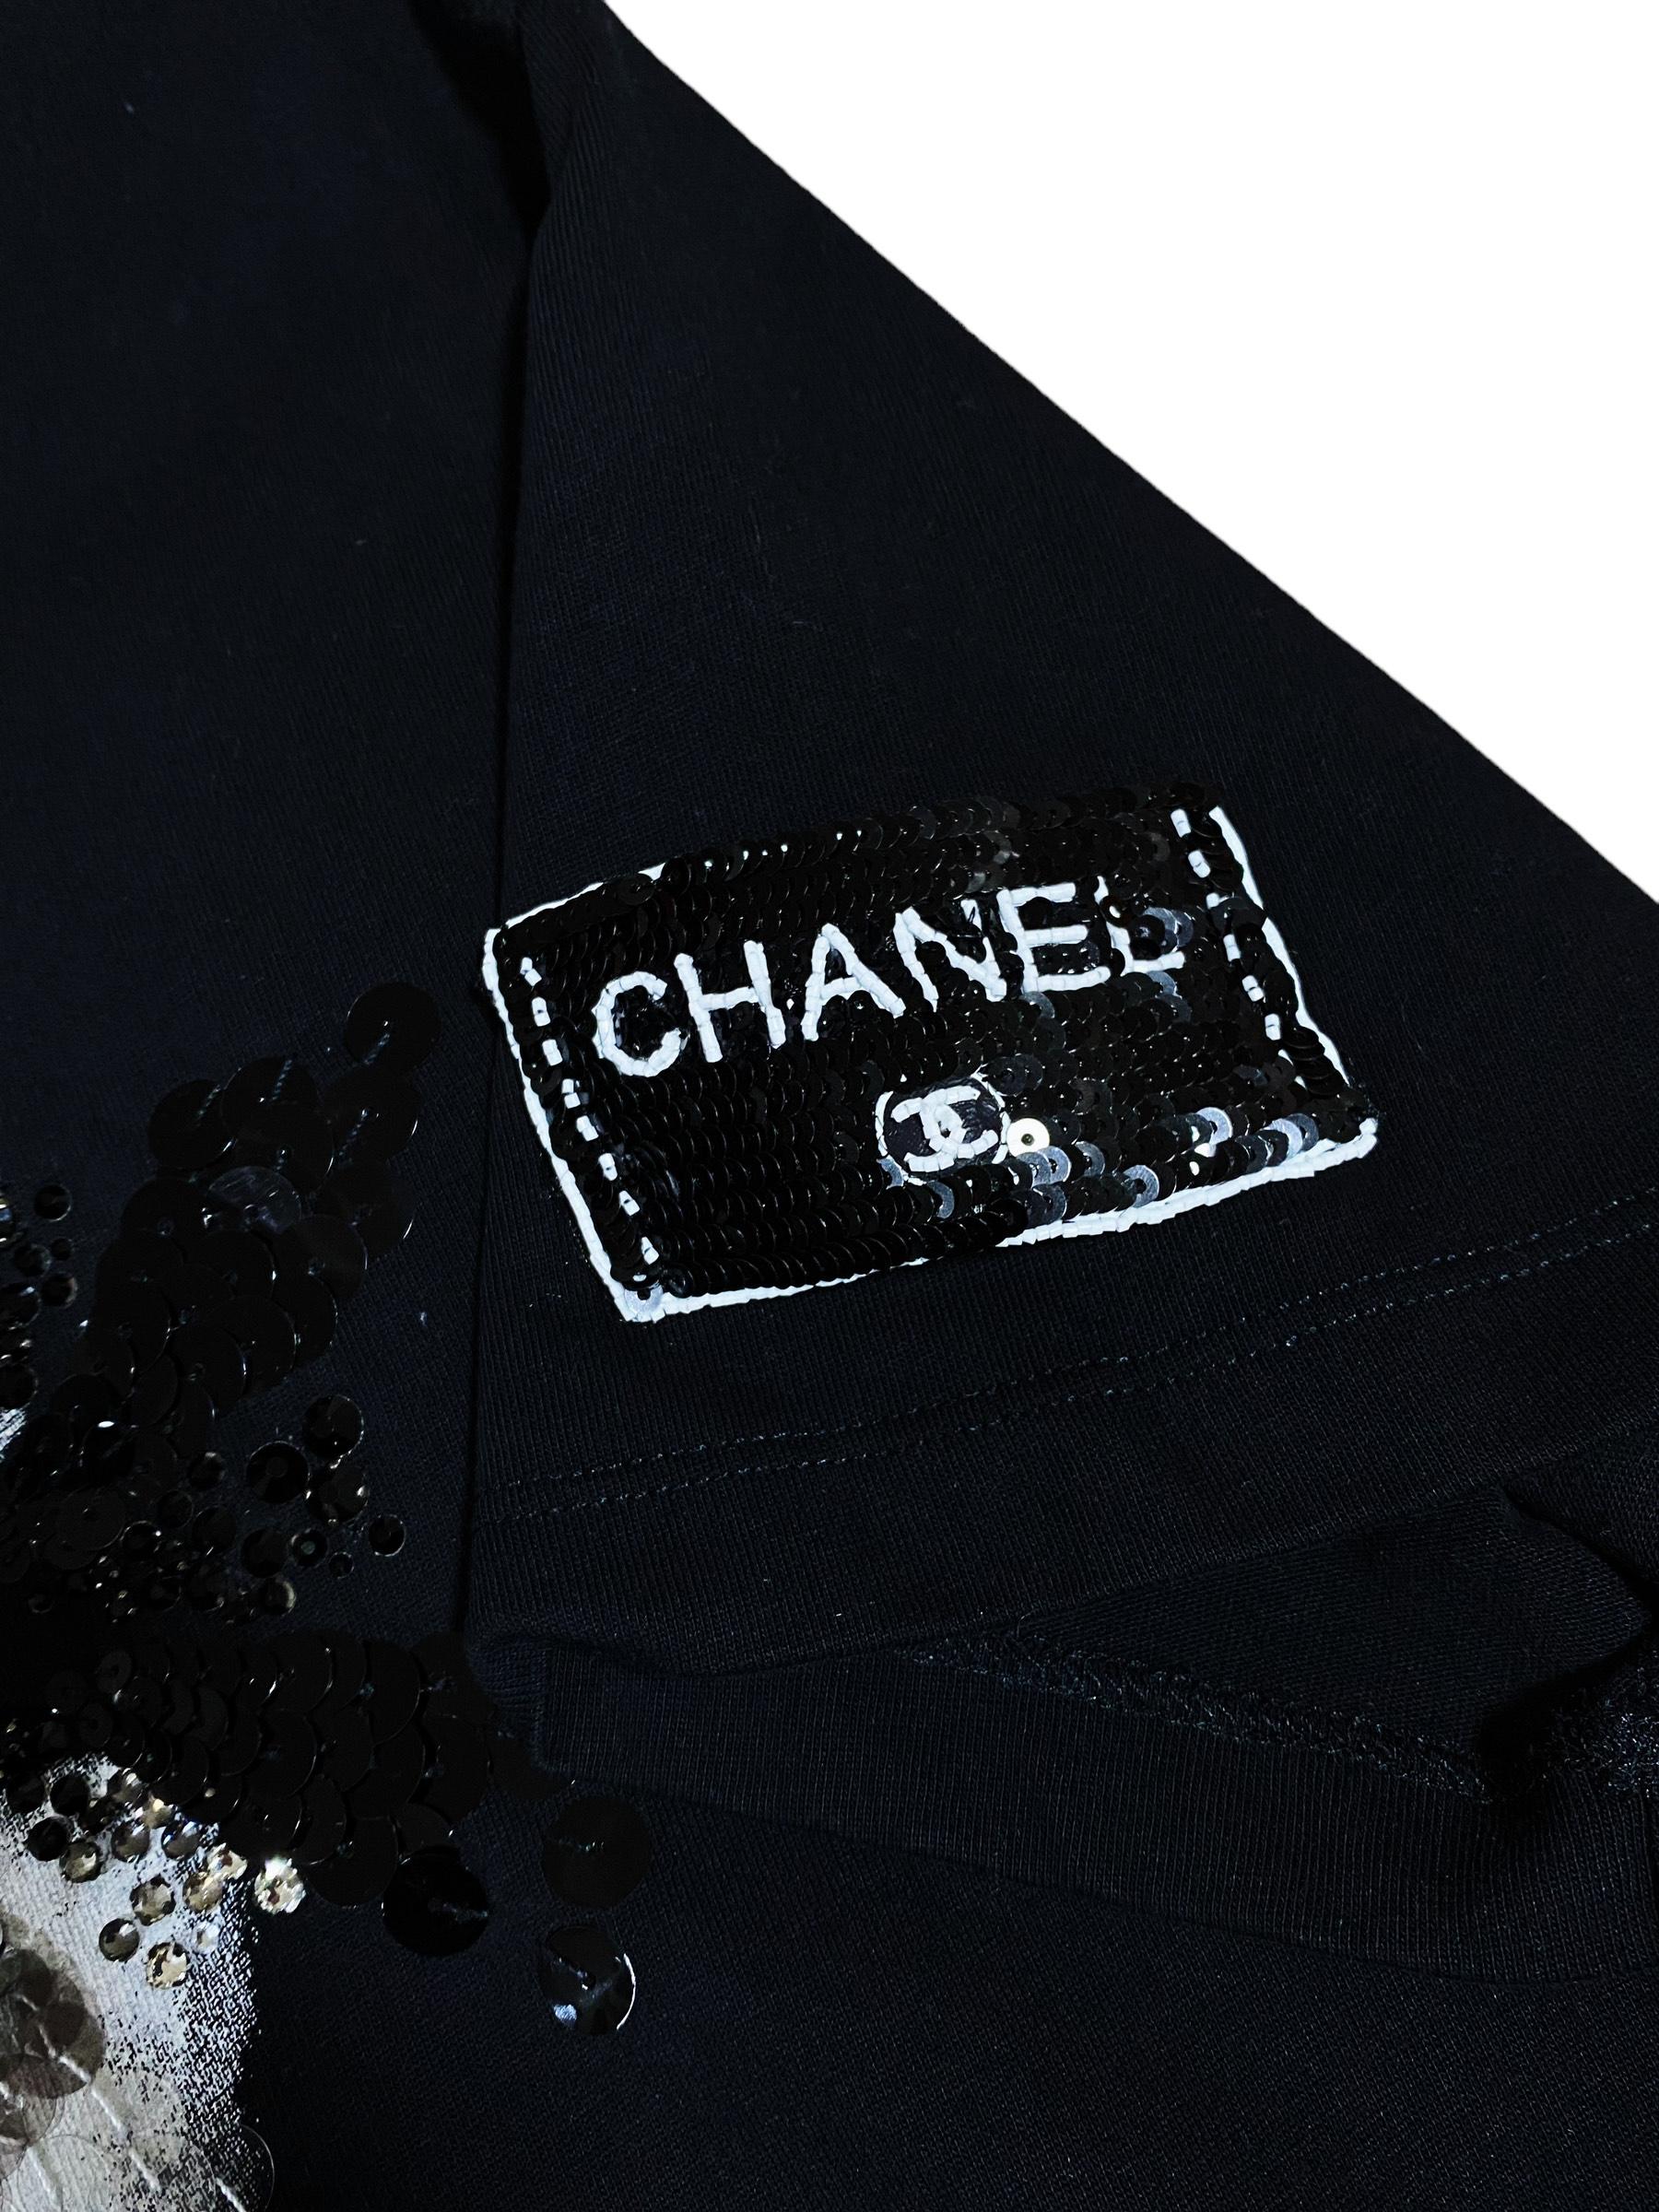 Chanel Black T-Shirt - Chanel Cruise 2021-22 6